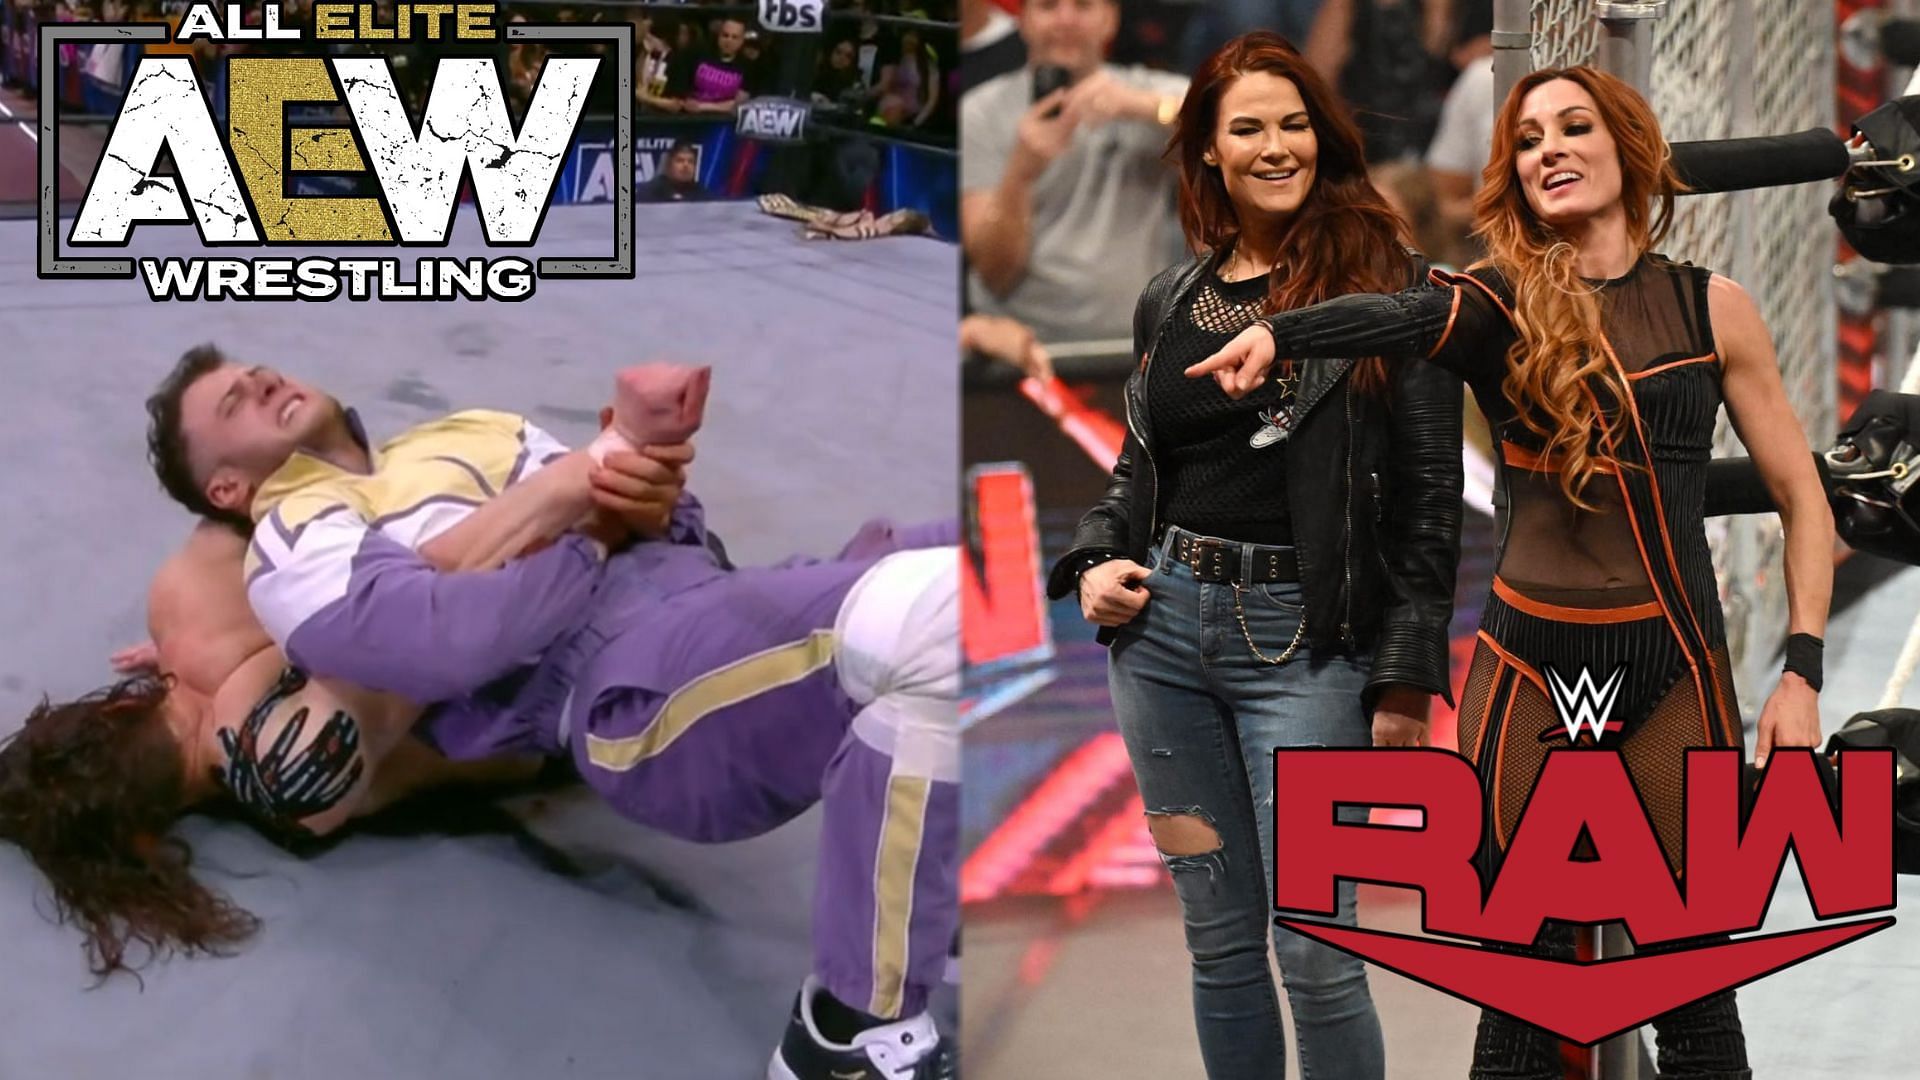 Did AEW Dynamite upstage WWE RAW this week?